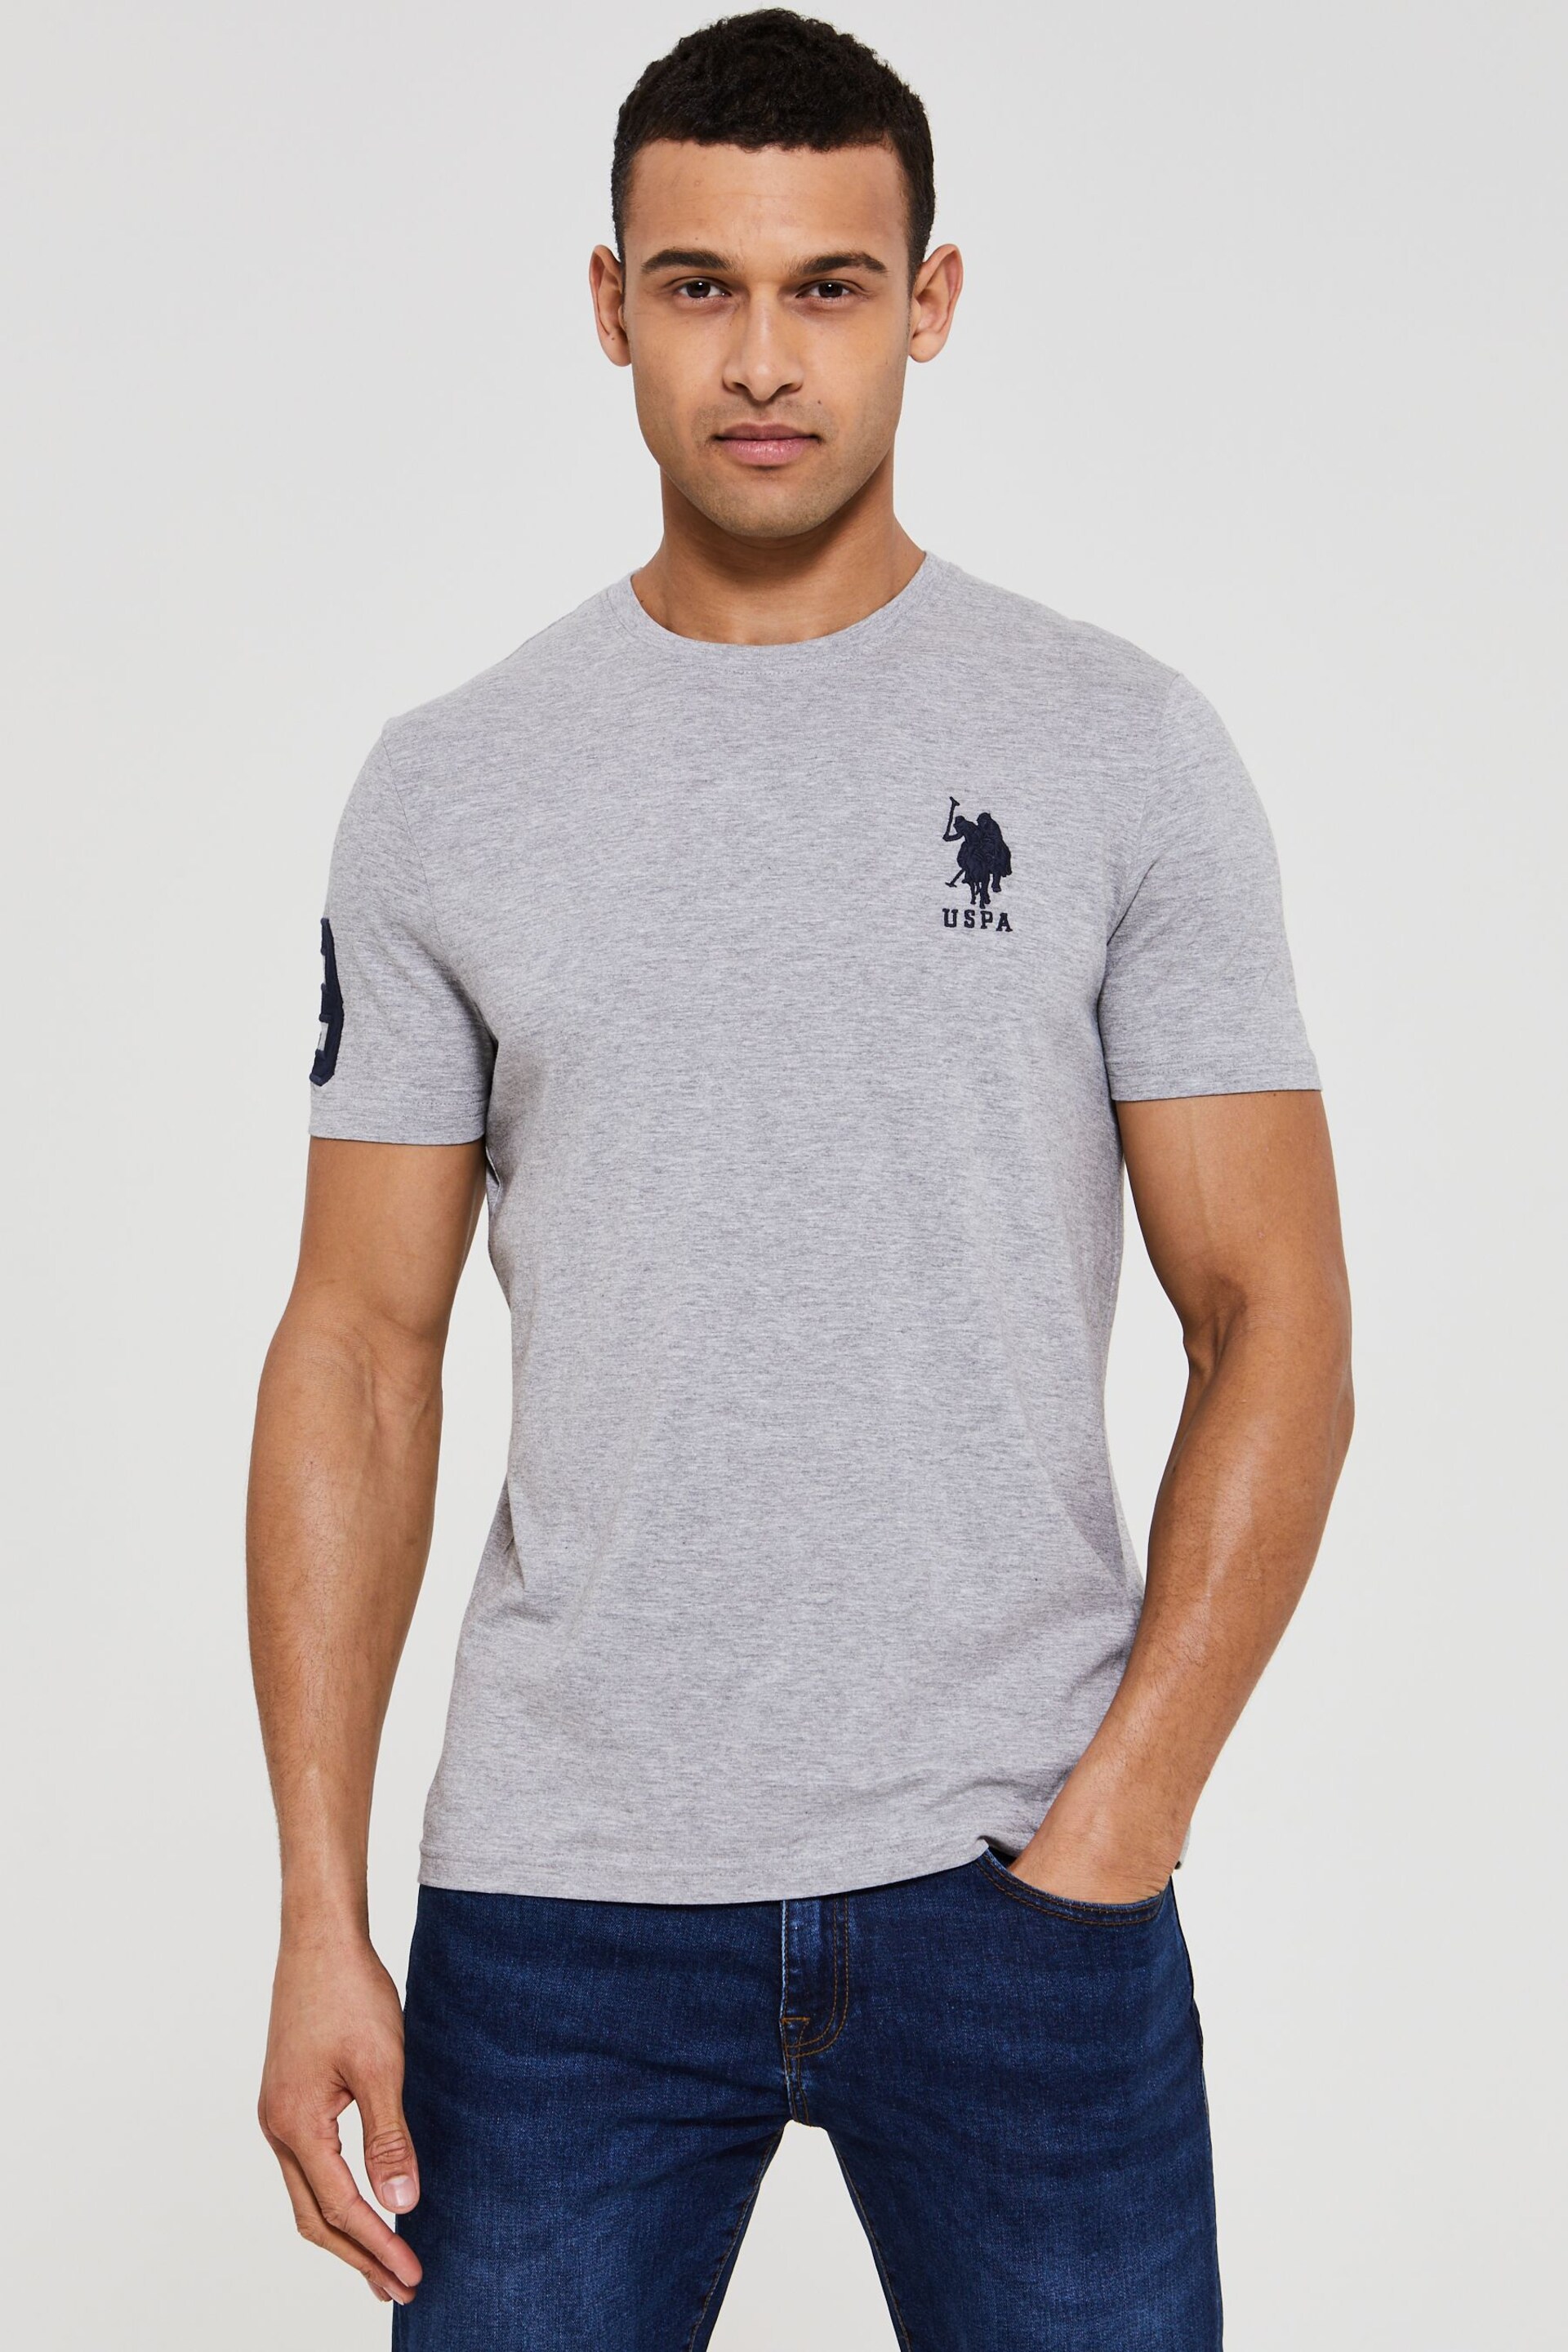 U.S. Polo Assn. Mens Large T-Shirt - Image 1 of 7